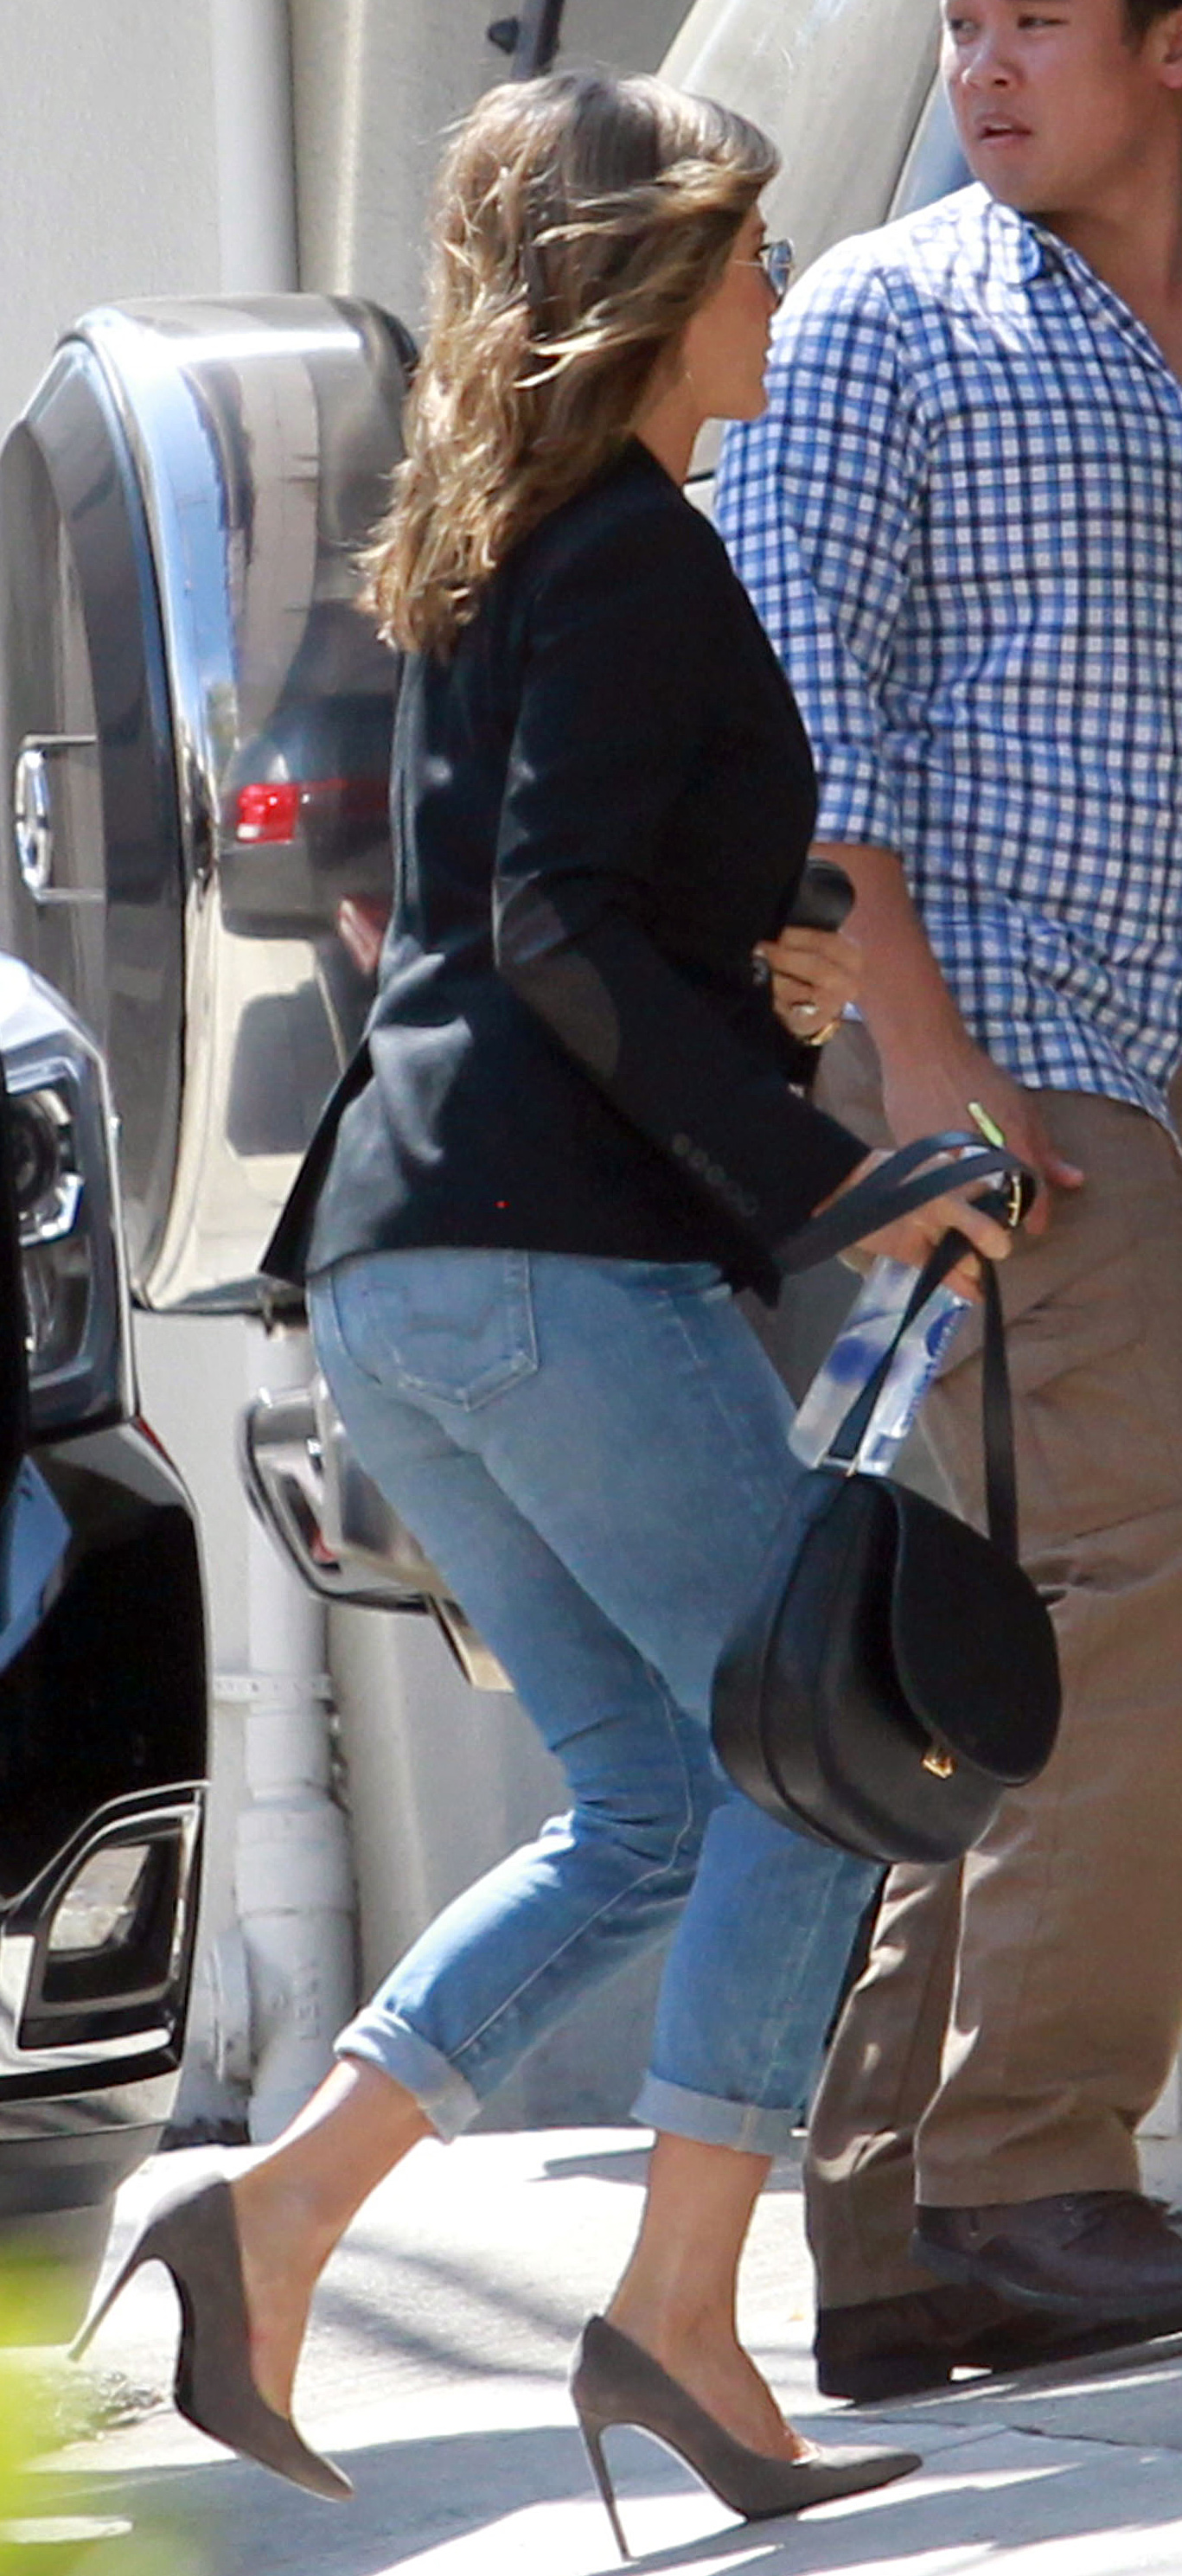 Jennifer Aniston at hair salon in Beverly Hills -13 - Full Size